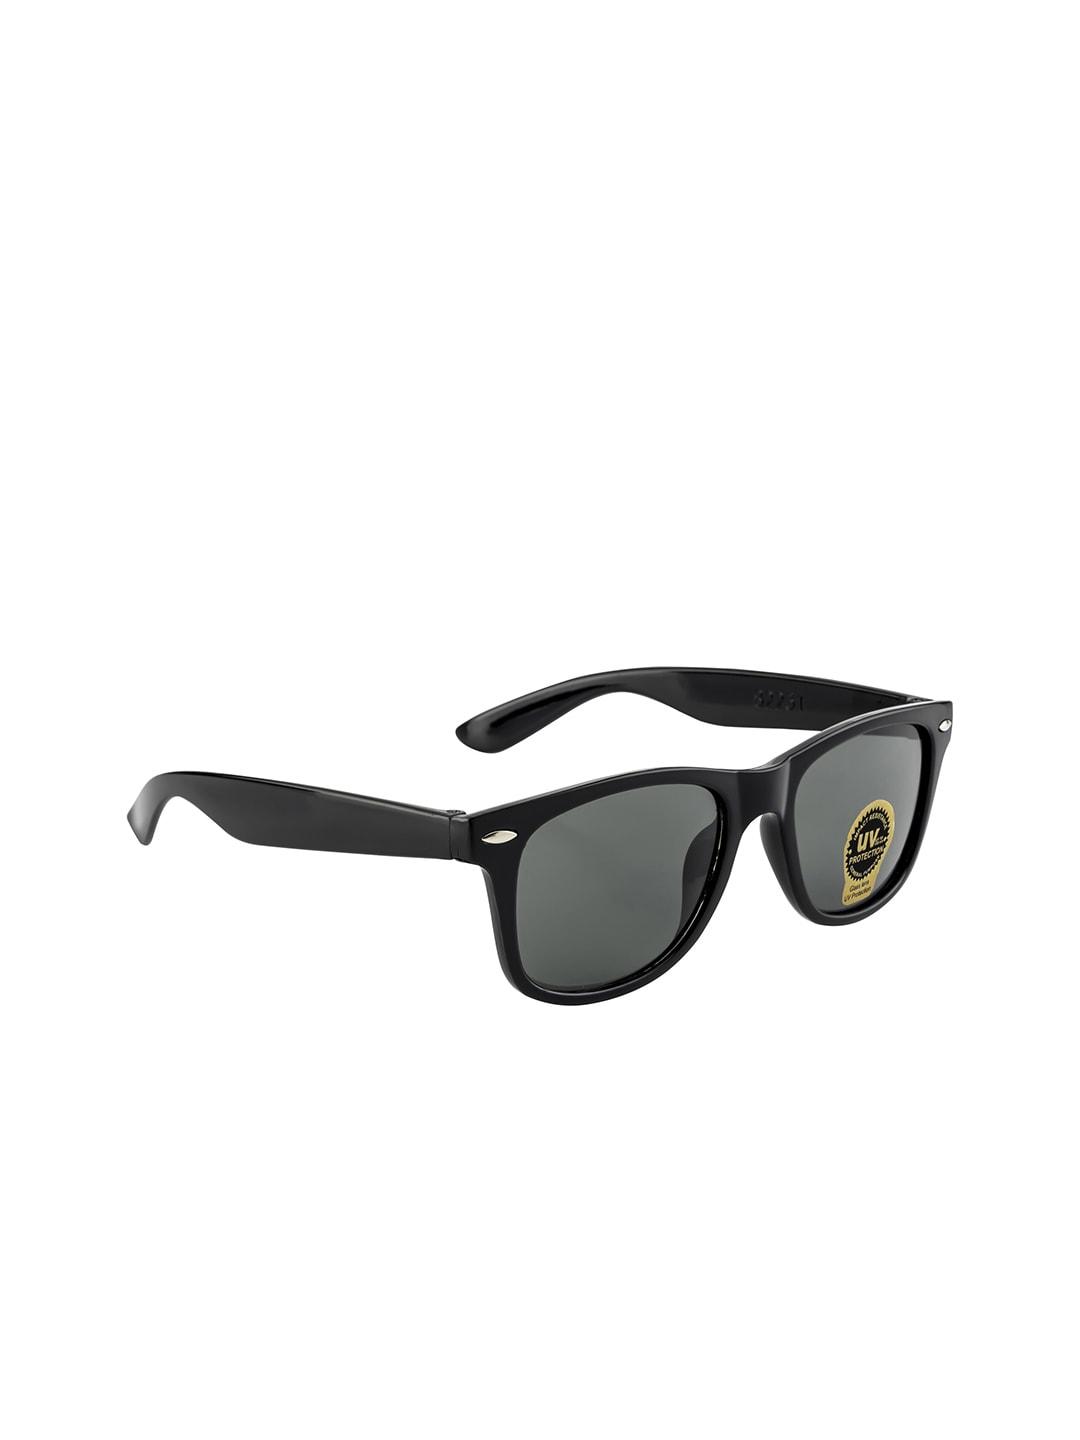 mast & harbour unisex black lens & black wayfarer sunglasses with uv protected lens